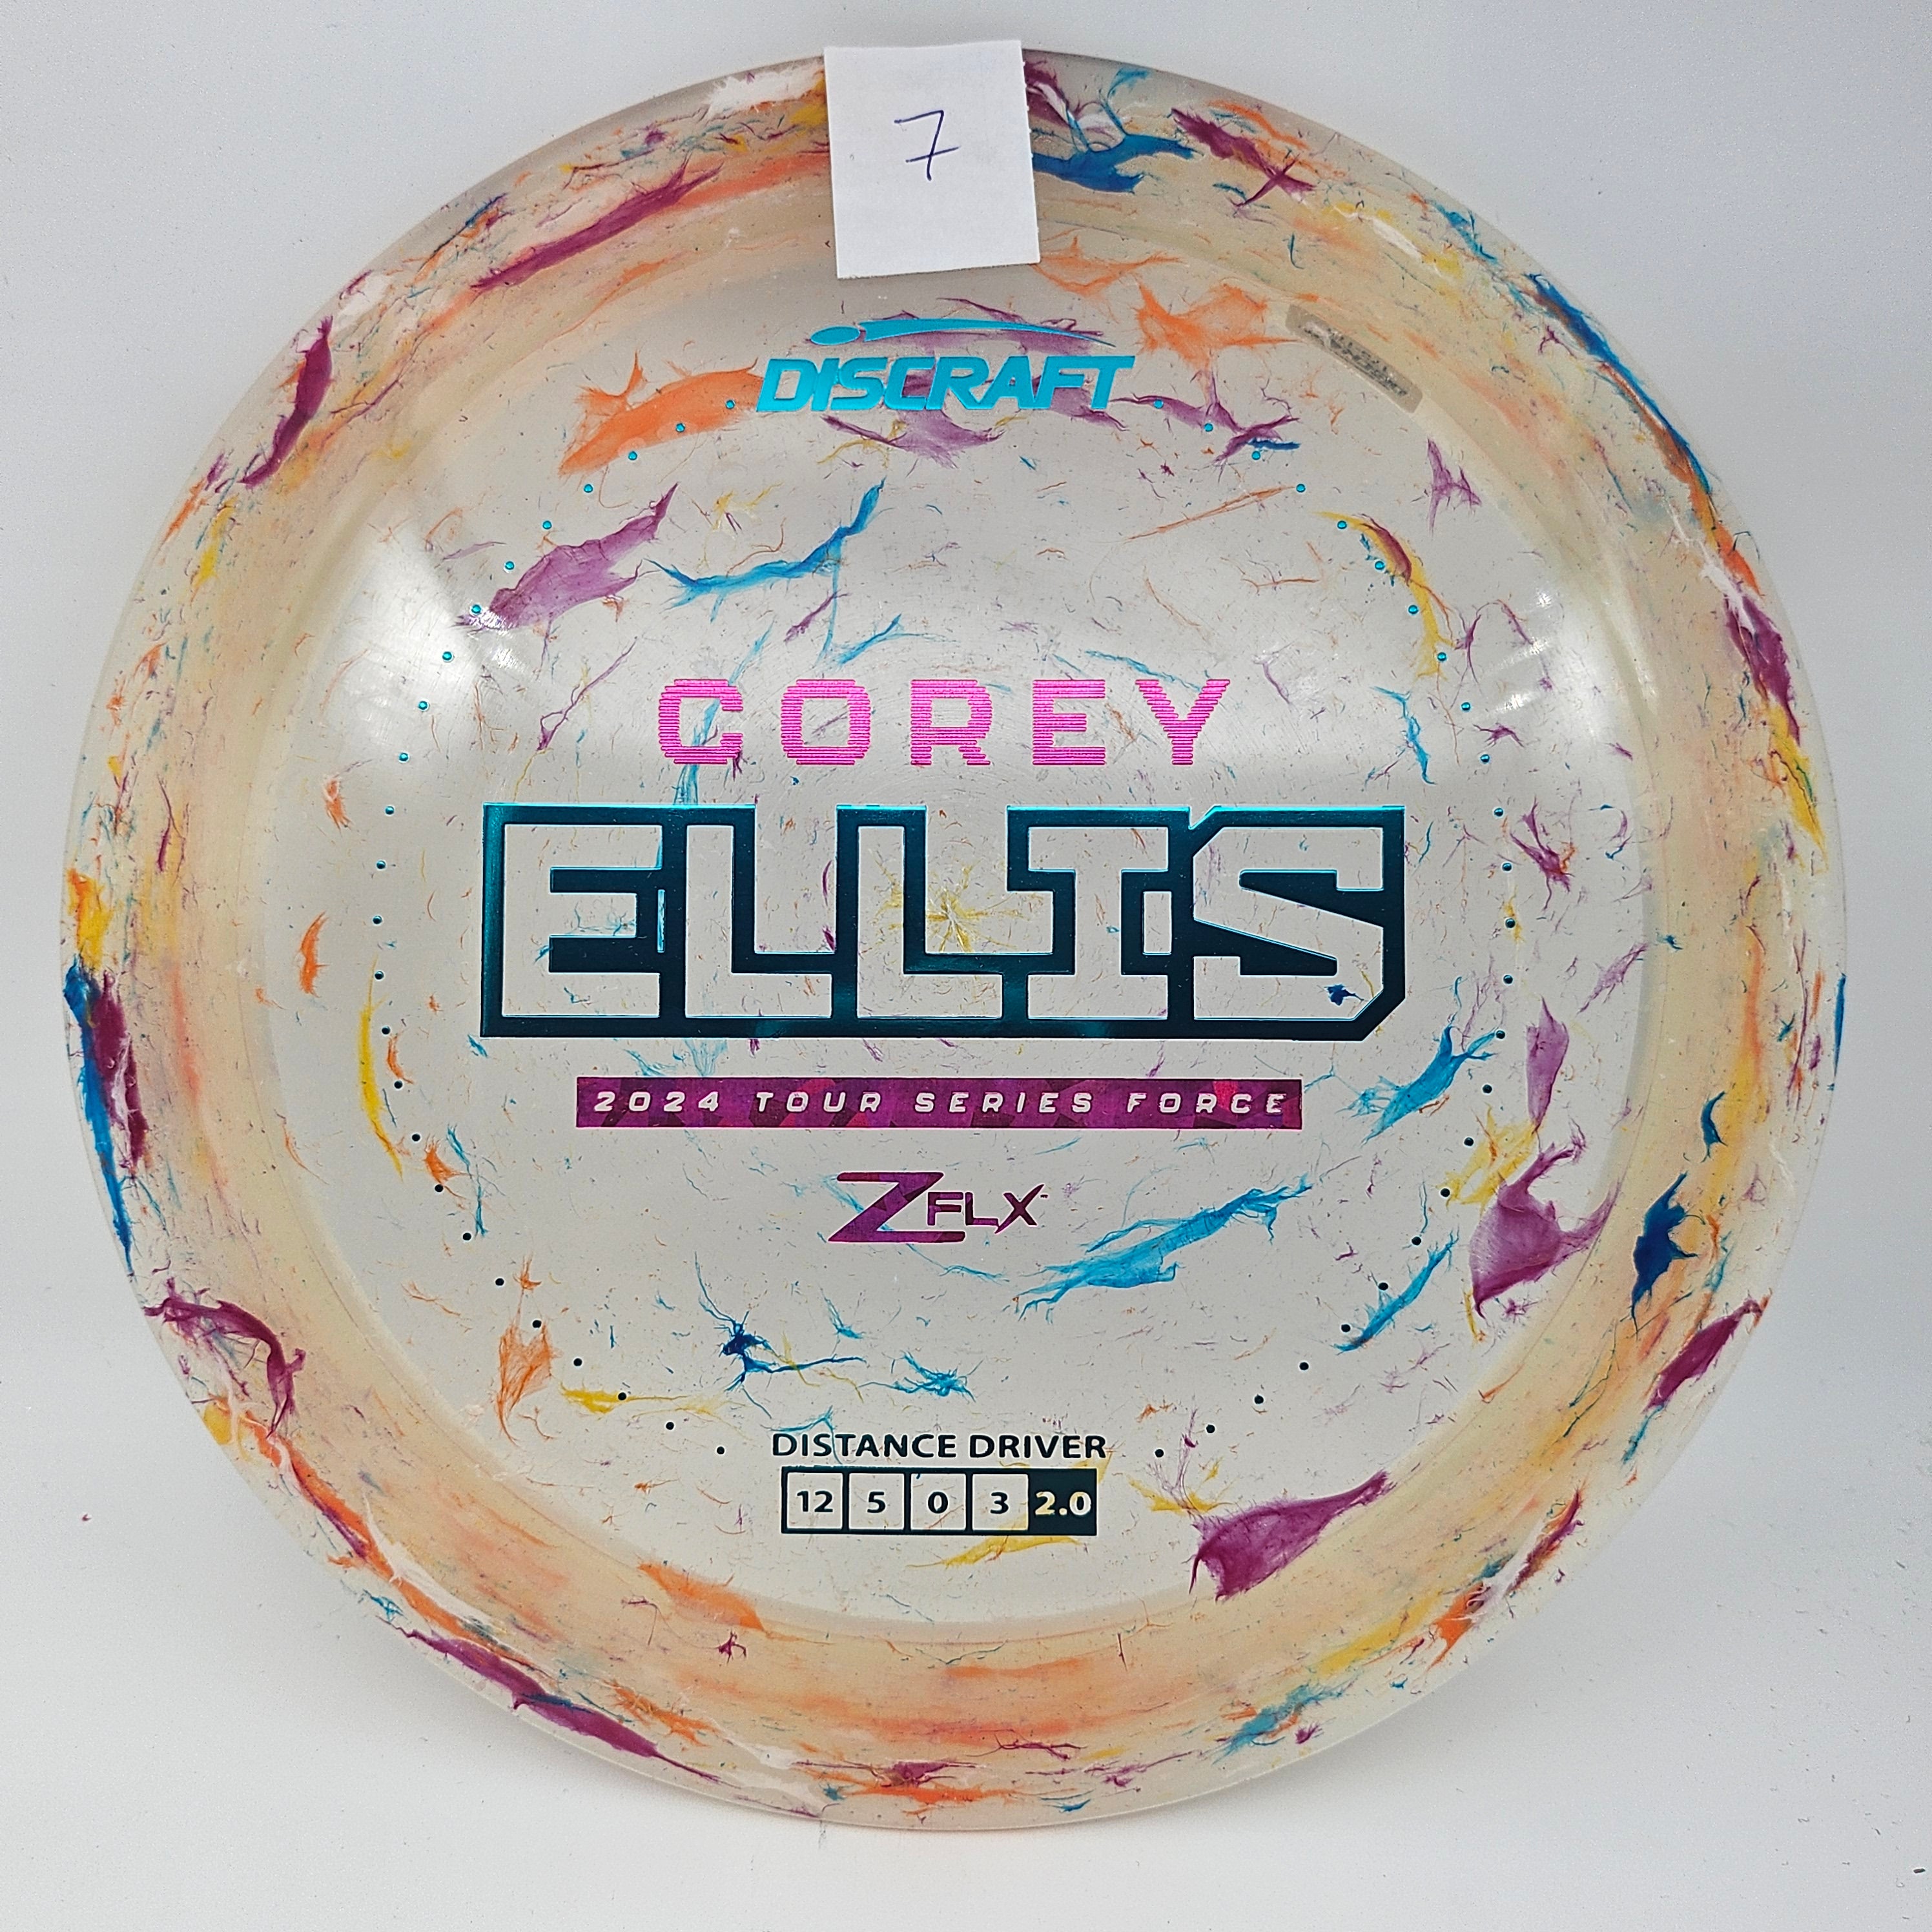 Z FLX Jawbreaker Force - Corey Ellis Tour Series 2024